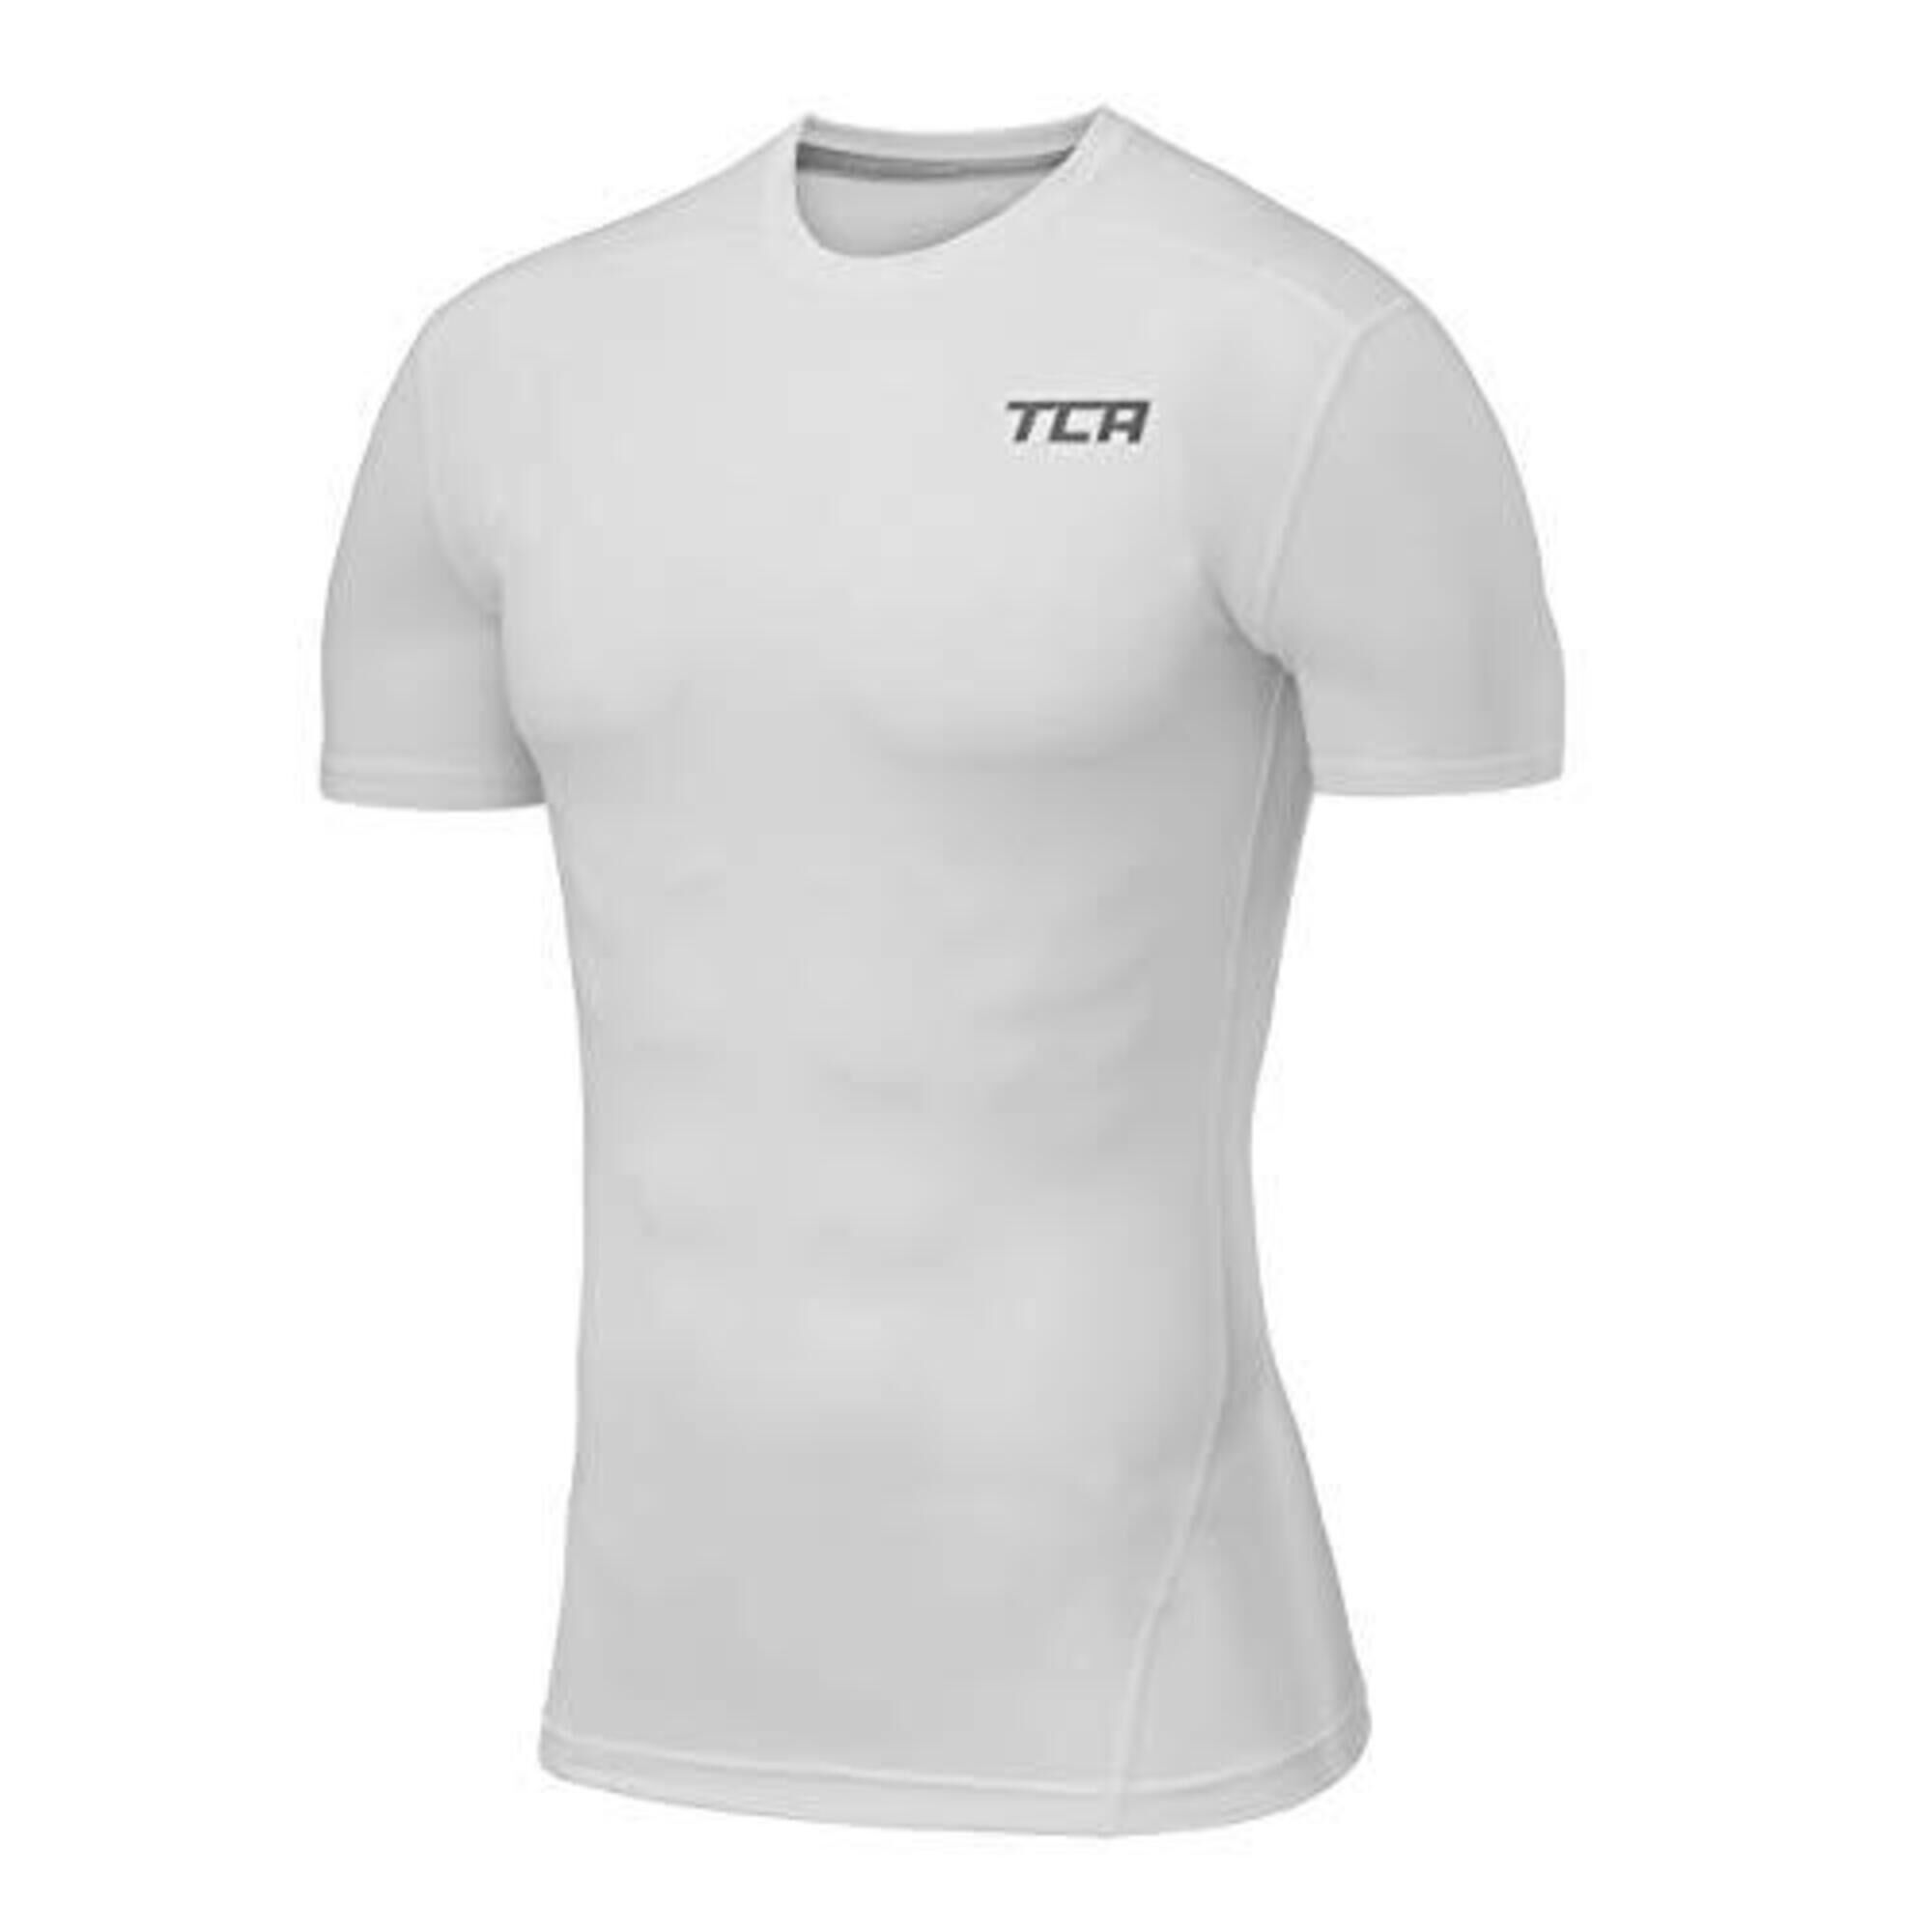 TCA Boys' Pro Performance Baselayer Short Sleeve Top